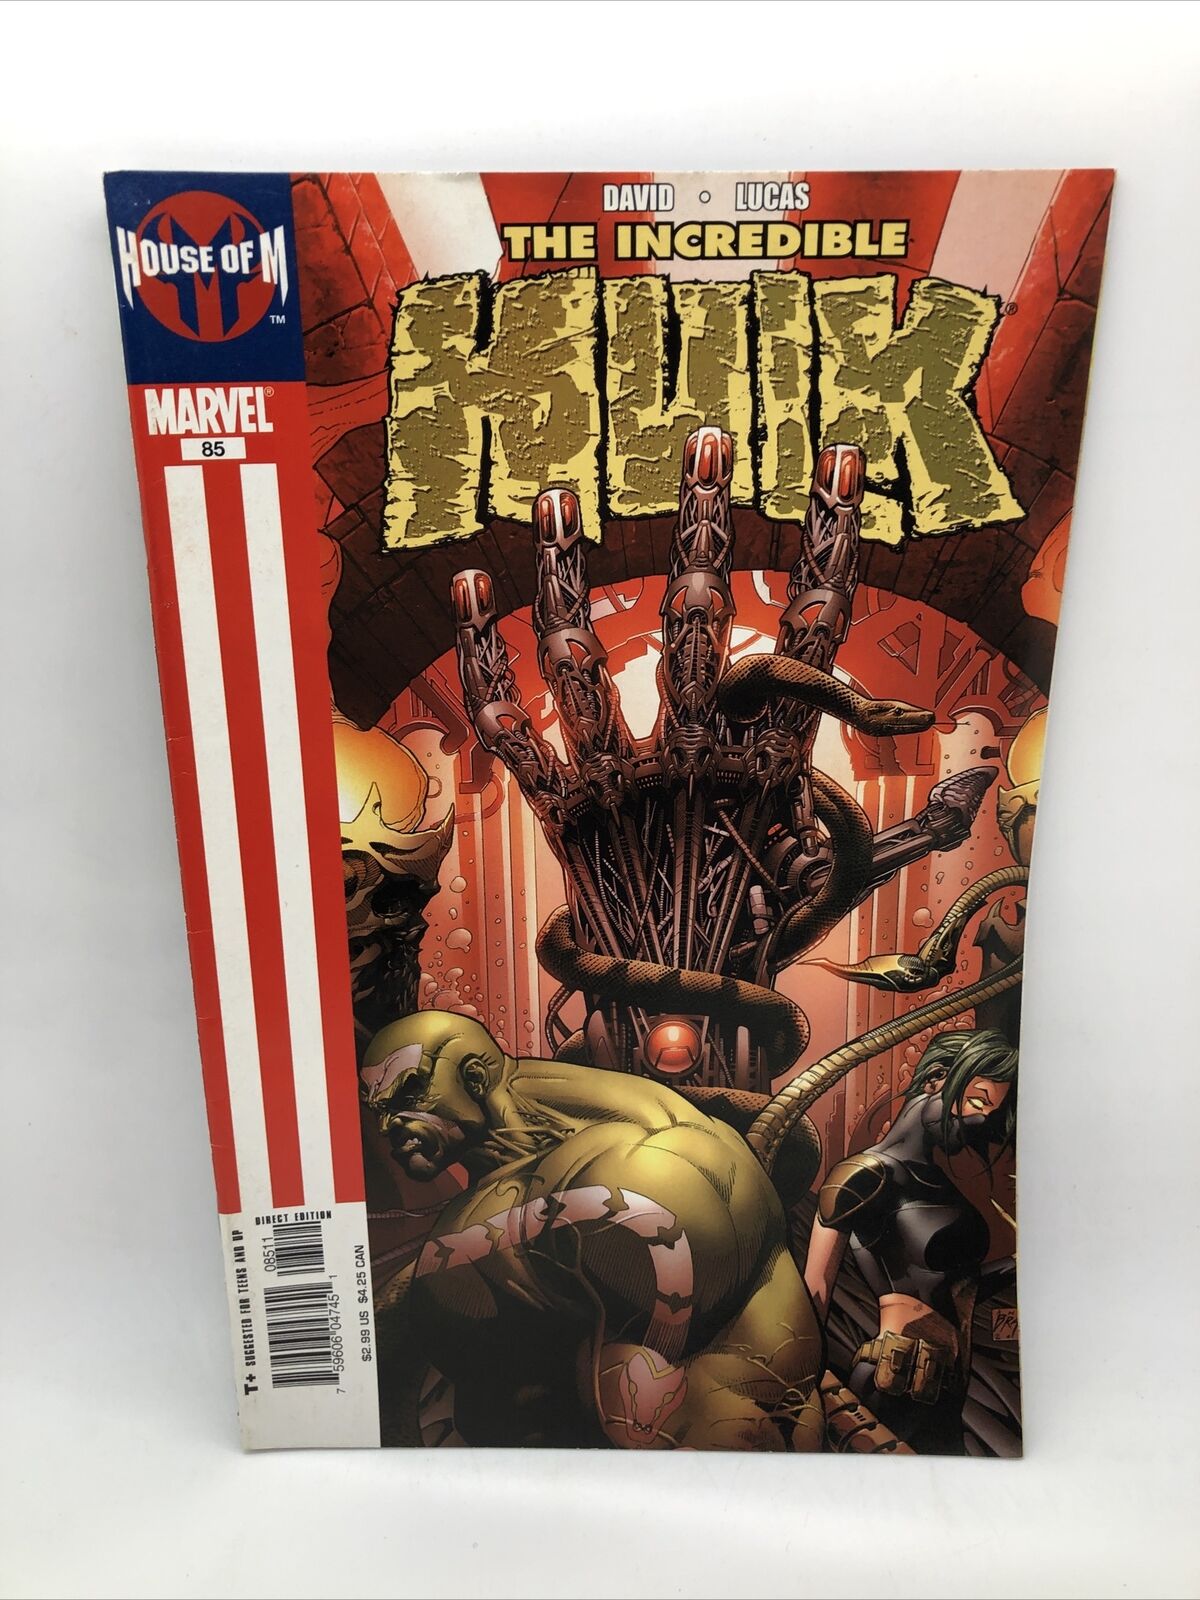 Incredible Hulk (1999 - 2nd Series) #85 - Marvel Comics